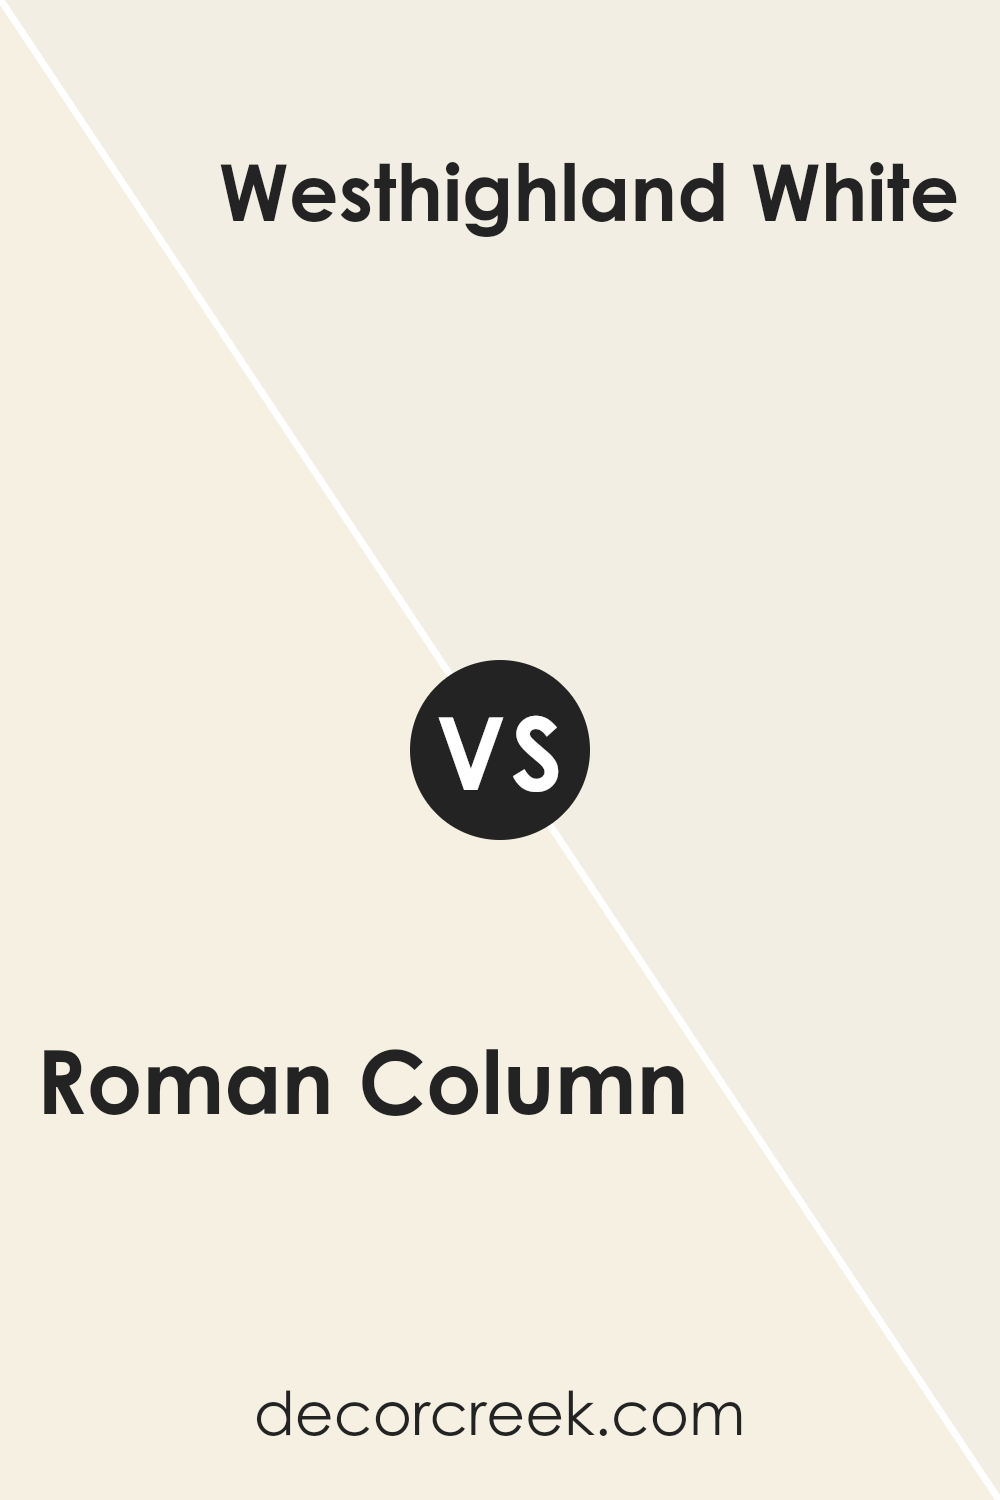 roman_column_sw_7562_vs_westhighland_white_sw_7566